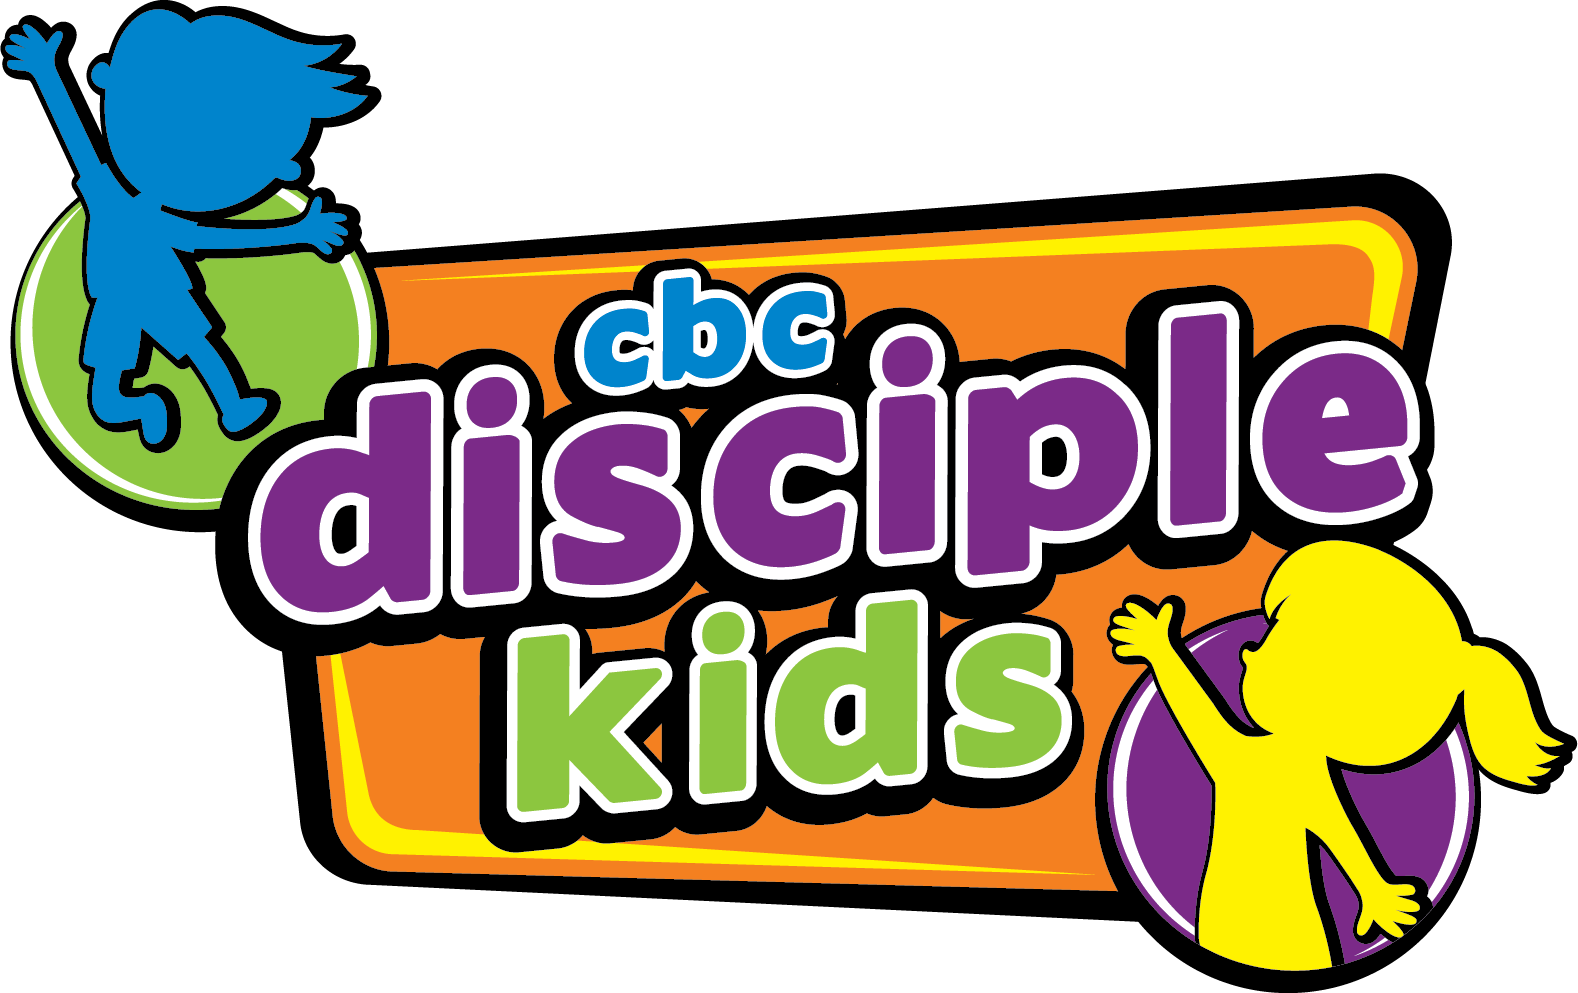 Disciple Kids